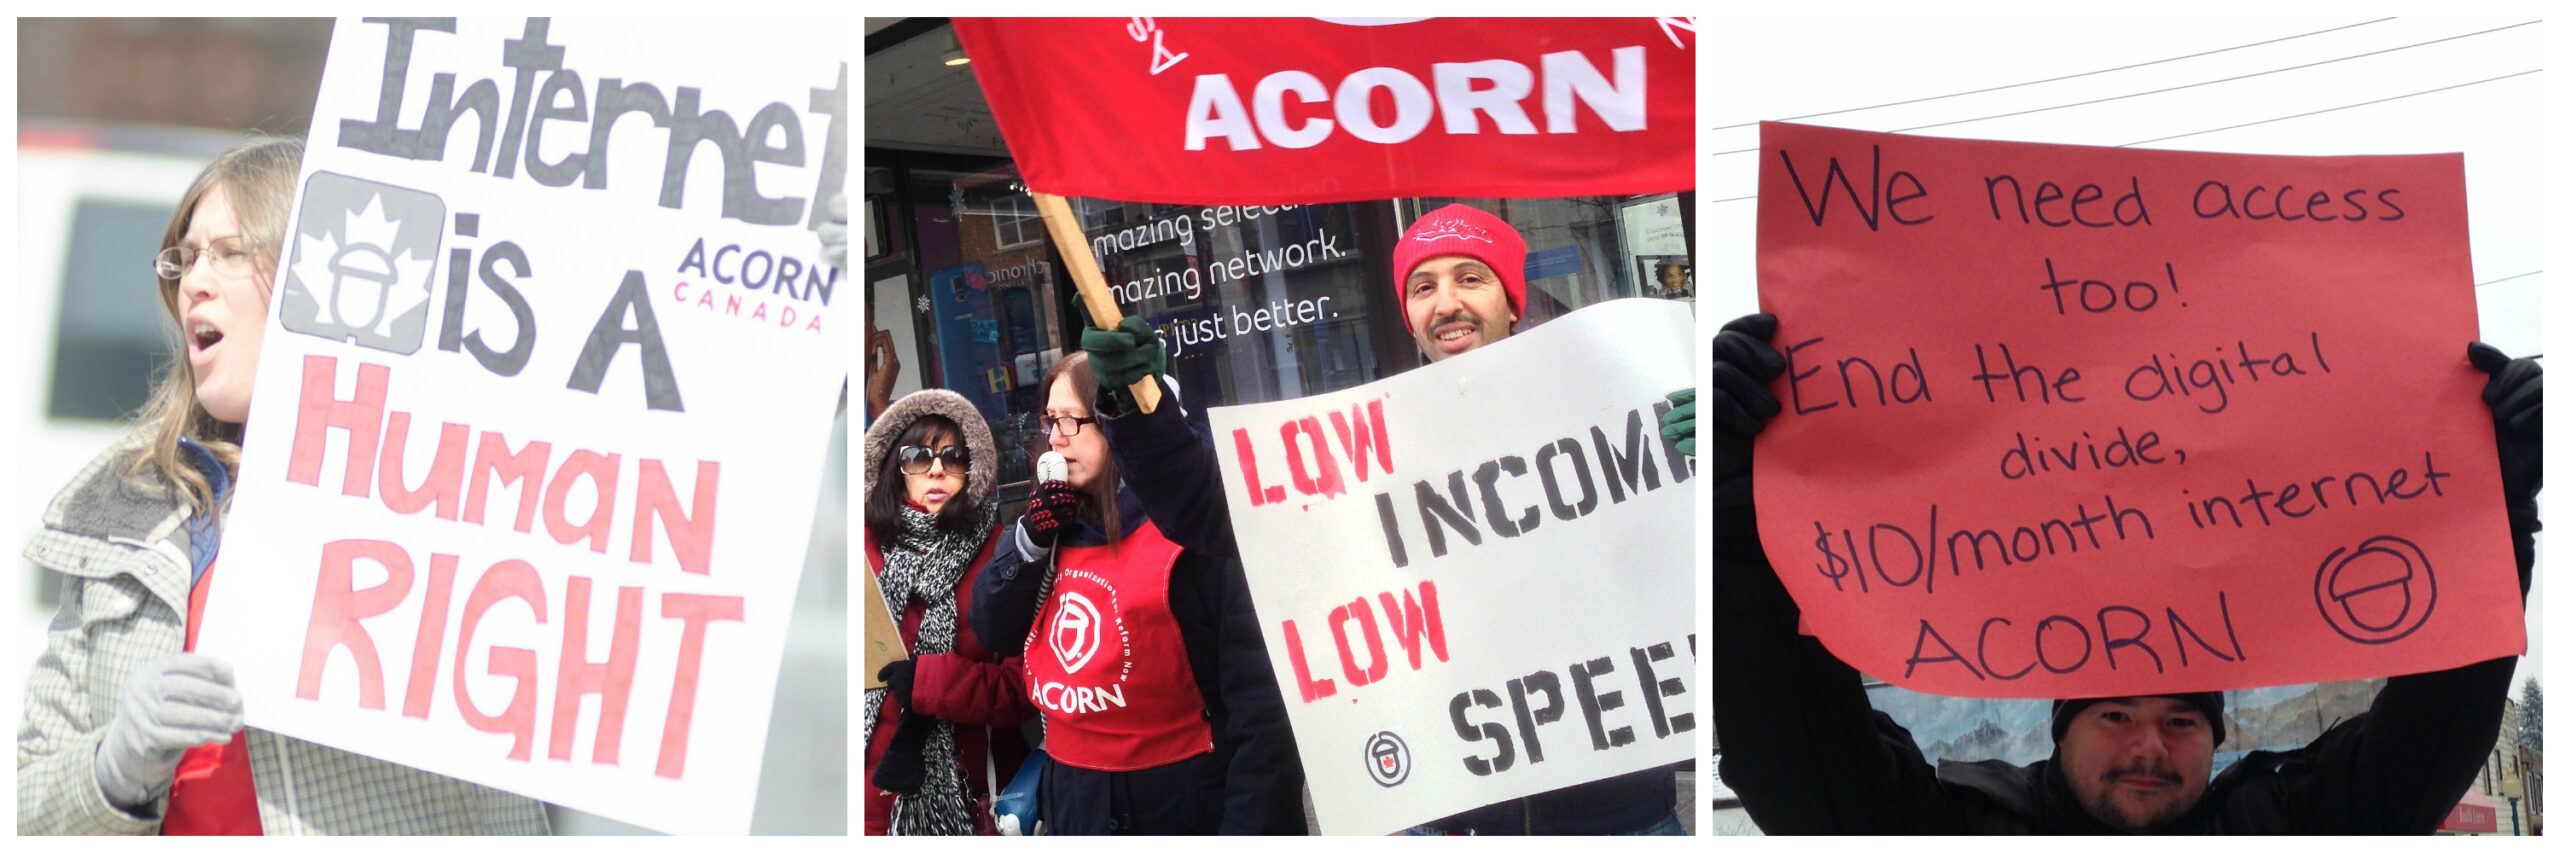 ACORN Canada Internet for All